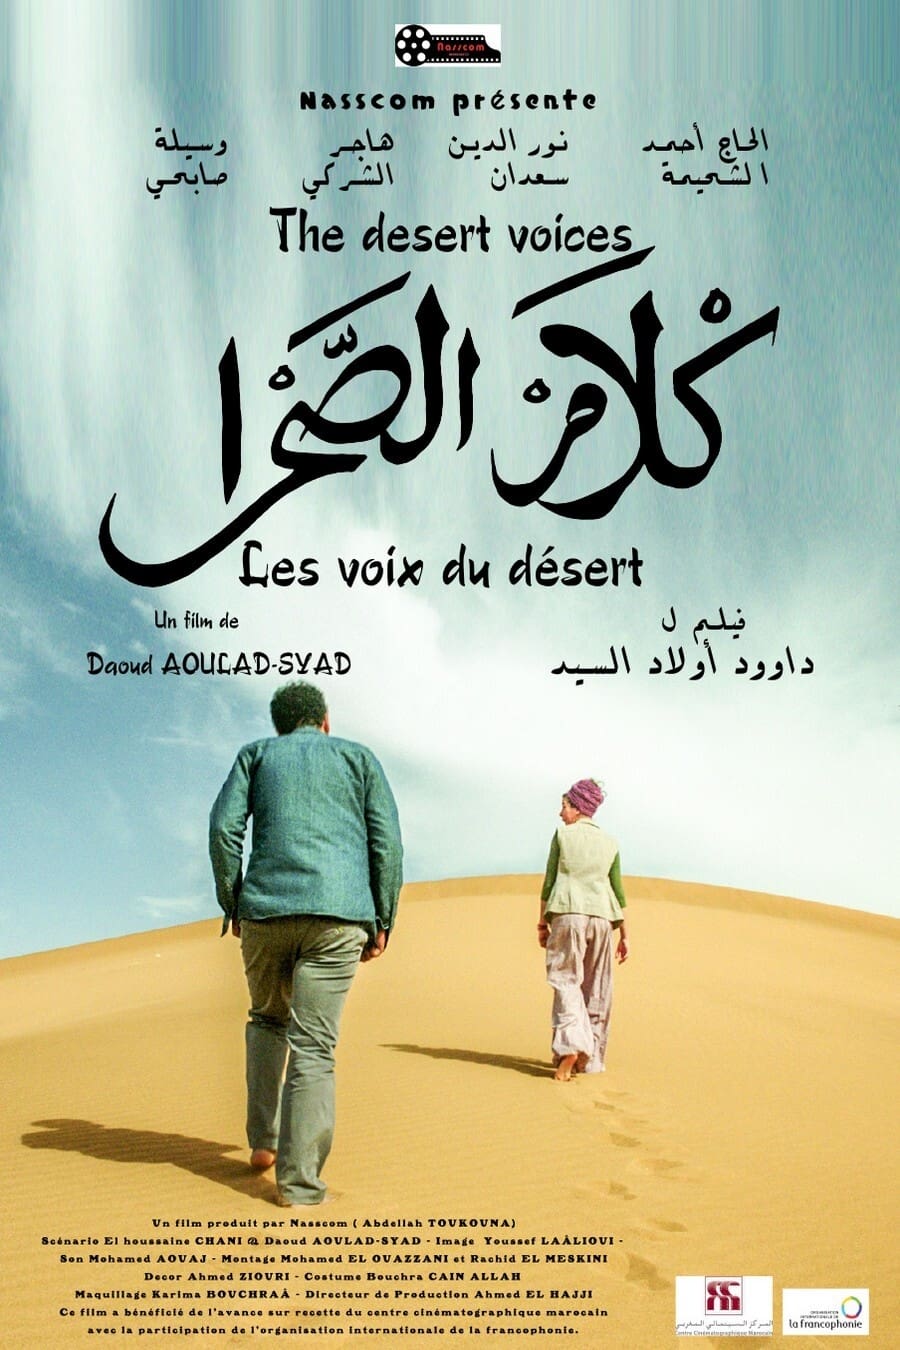 The desert voices